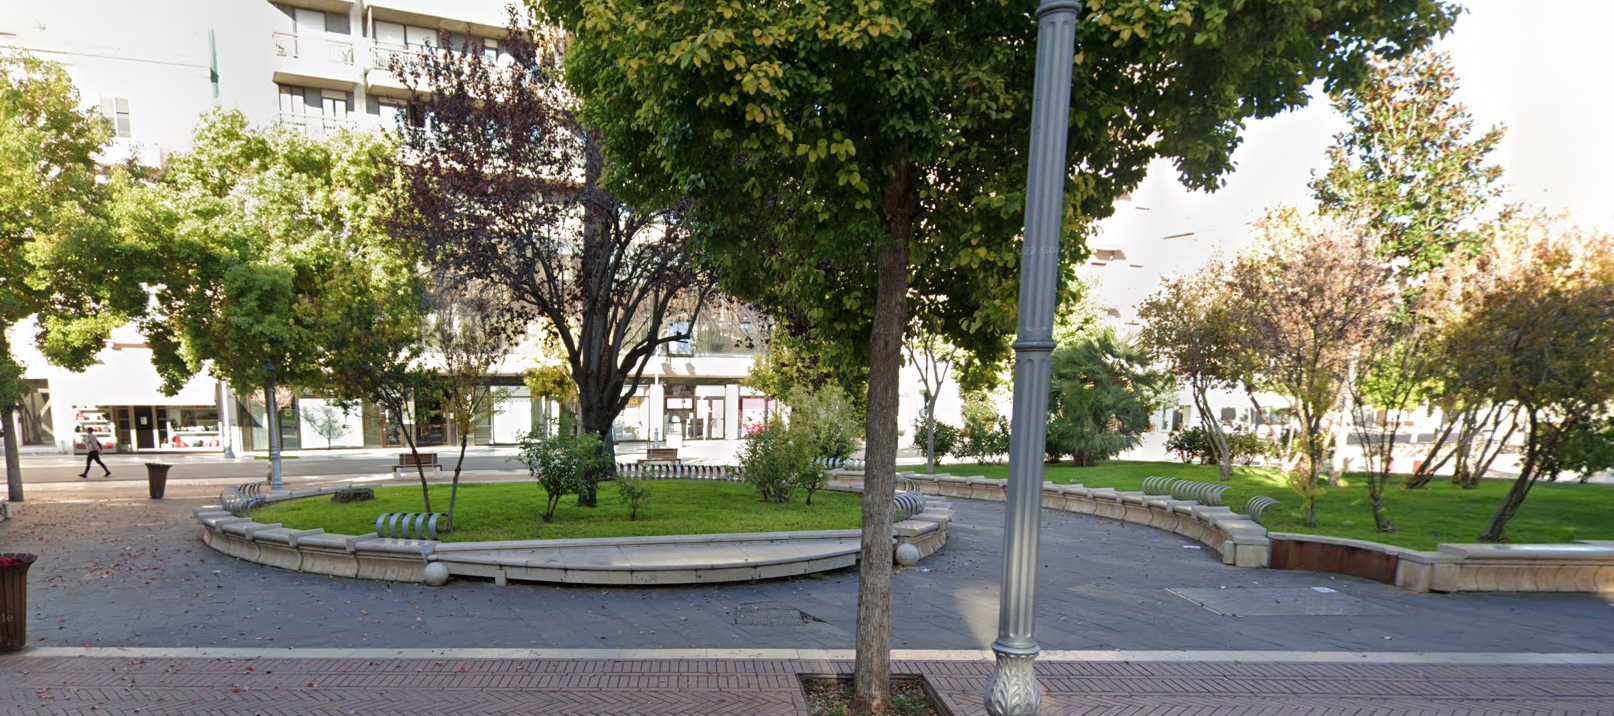 Piazza Umberto Giordano by Google Earth